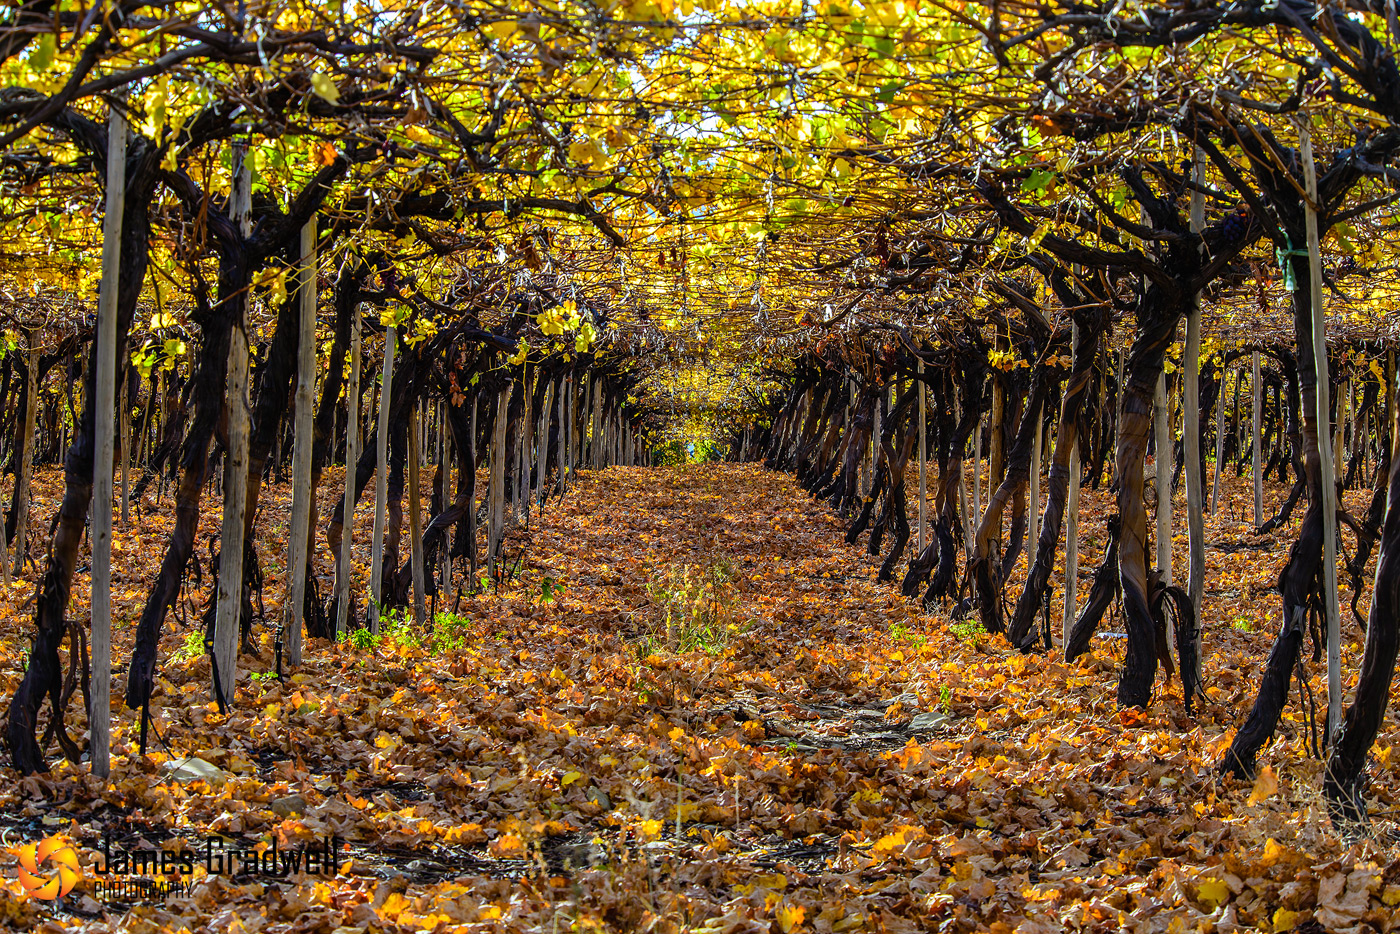 Cape Winelands in Autumn